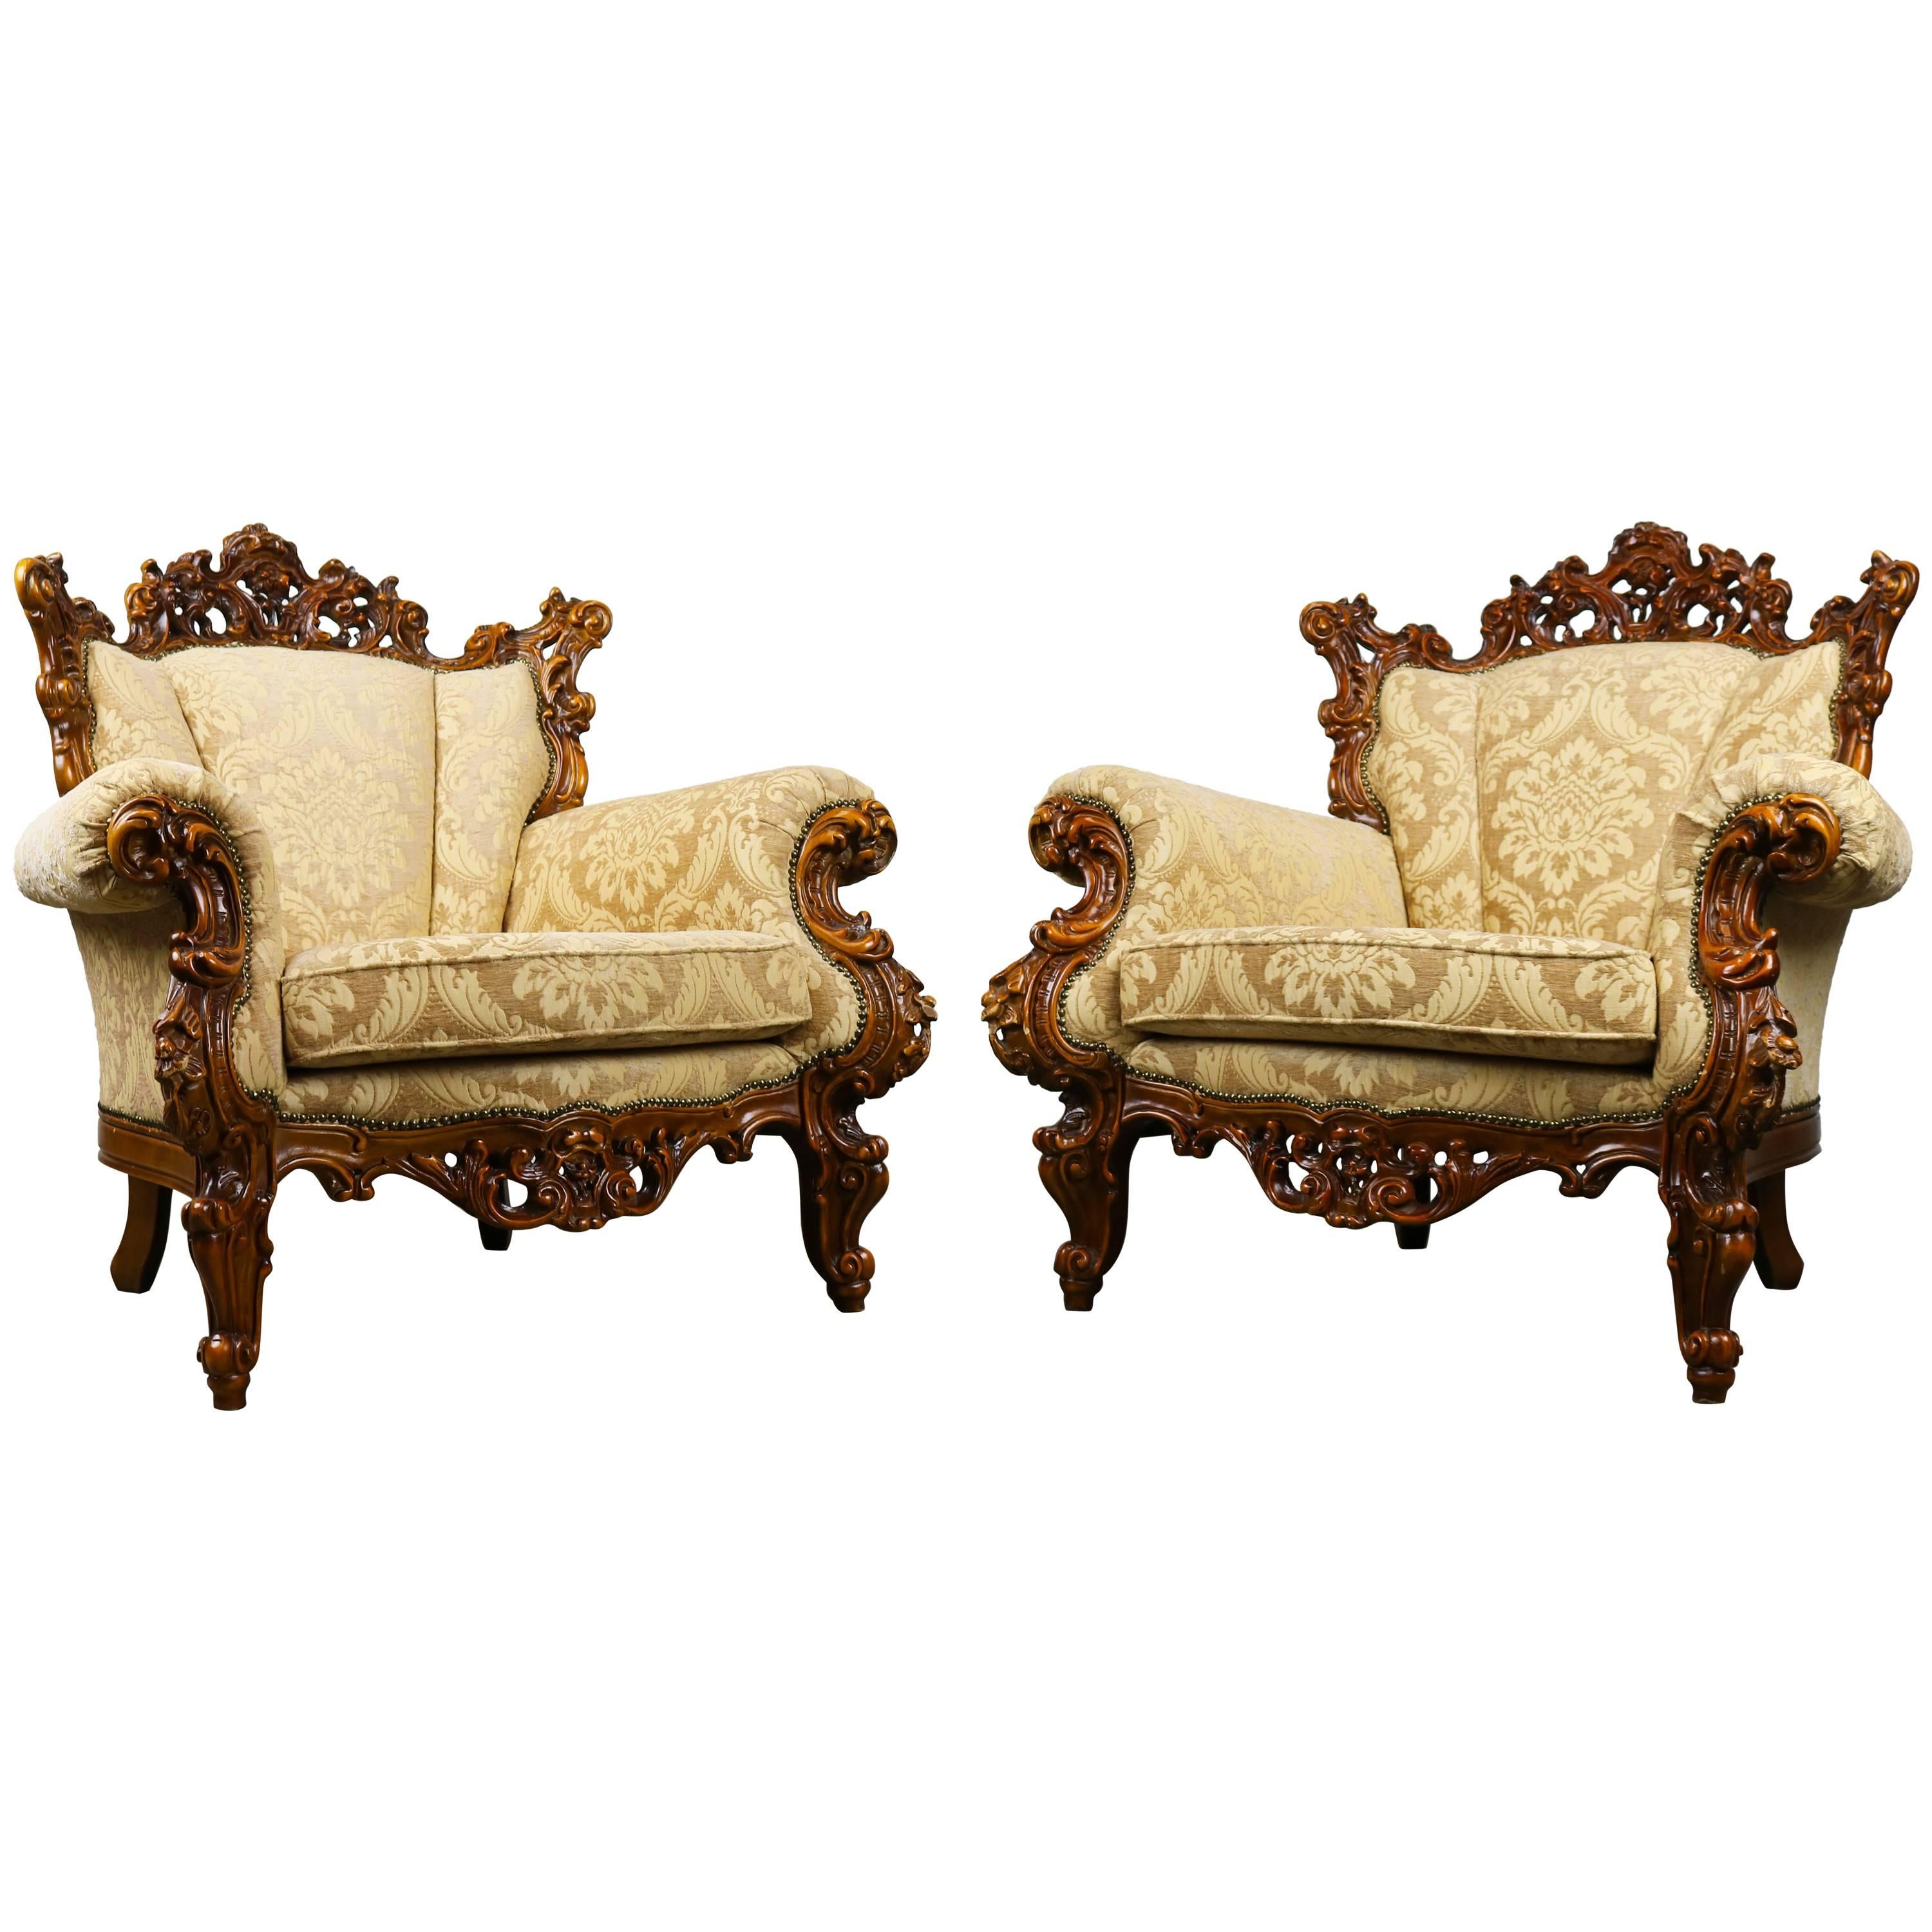 Luxueuses chaises longues italiennes anciennes en marron beige de style rococo/baroque en vente